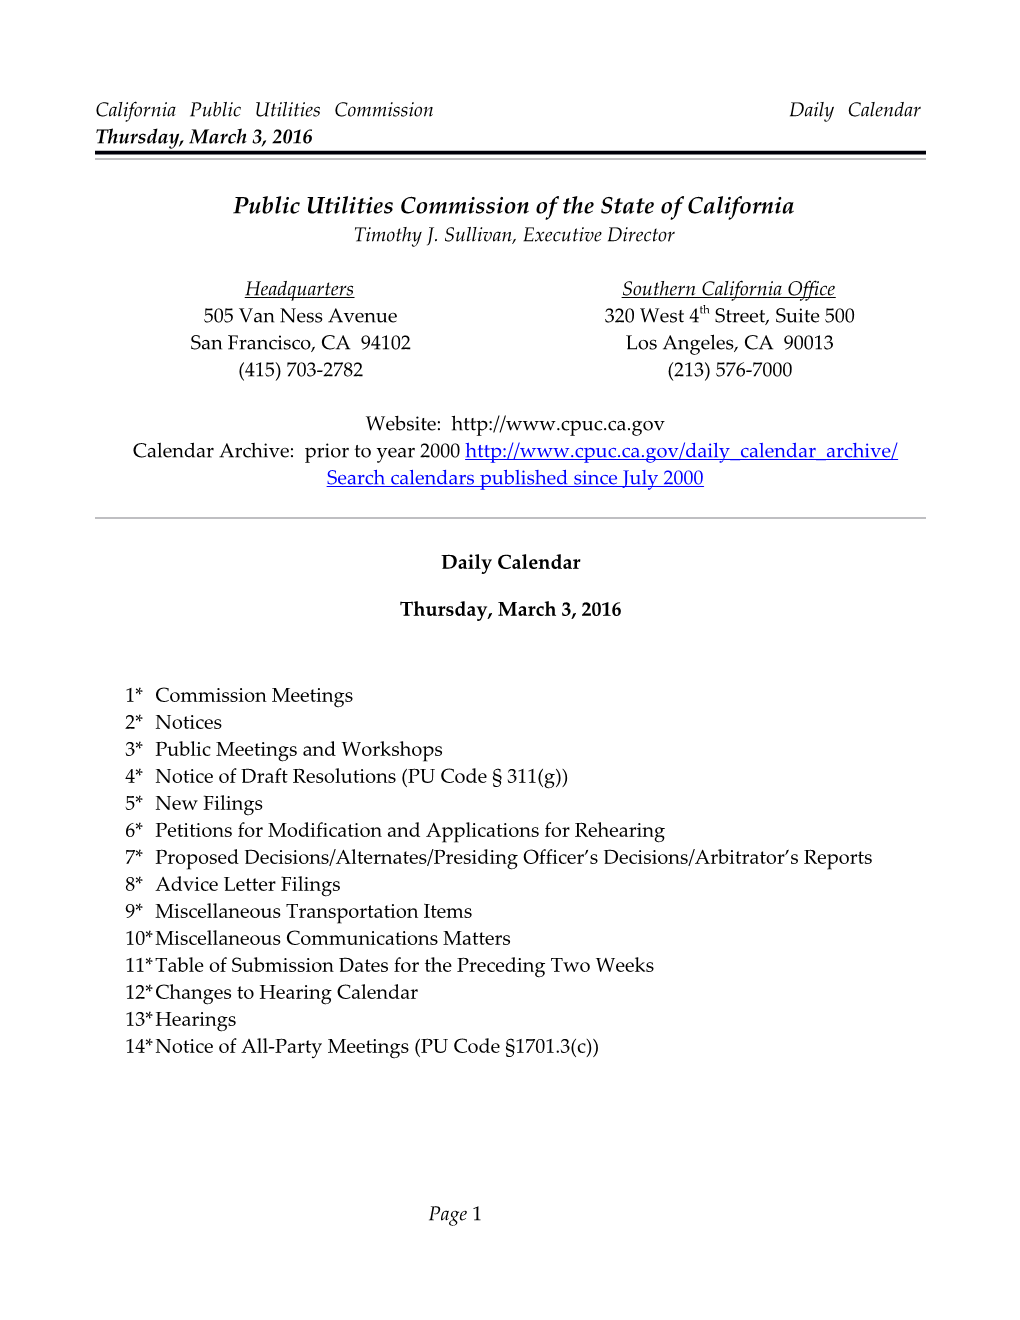 California Public Utilities Commission Daily Calendar Thursday, March 3, 2016